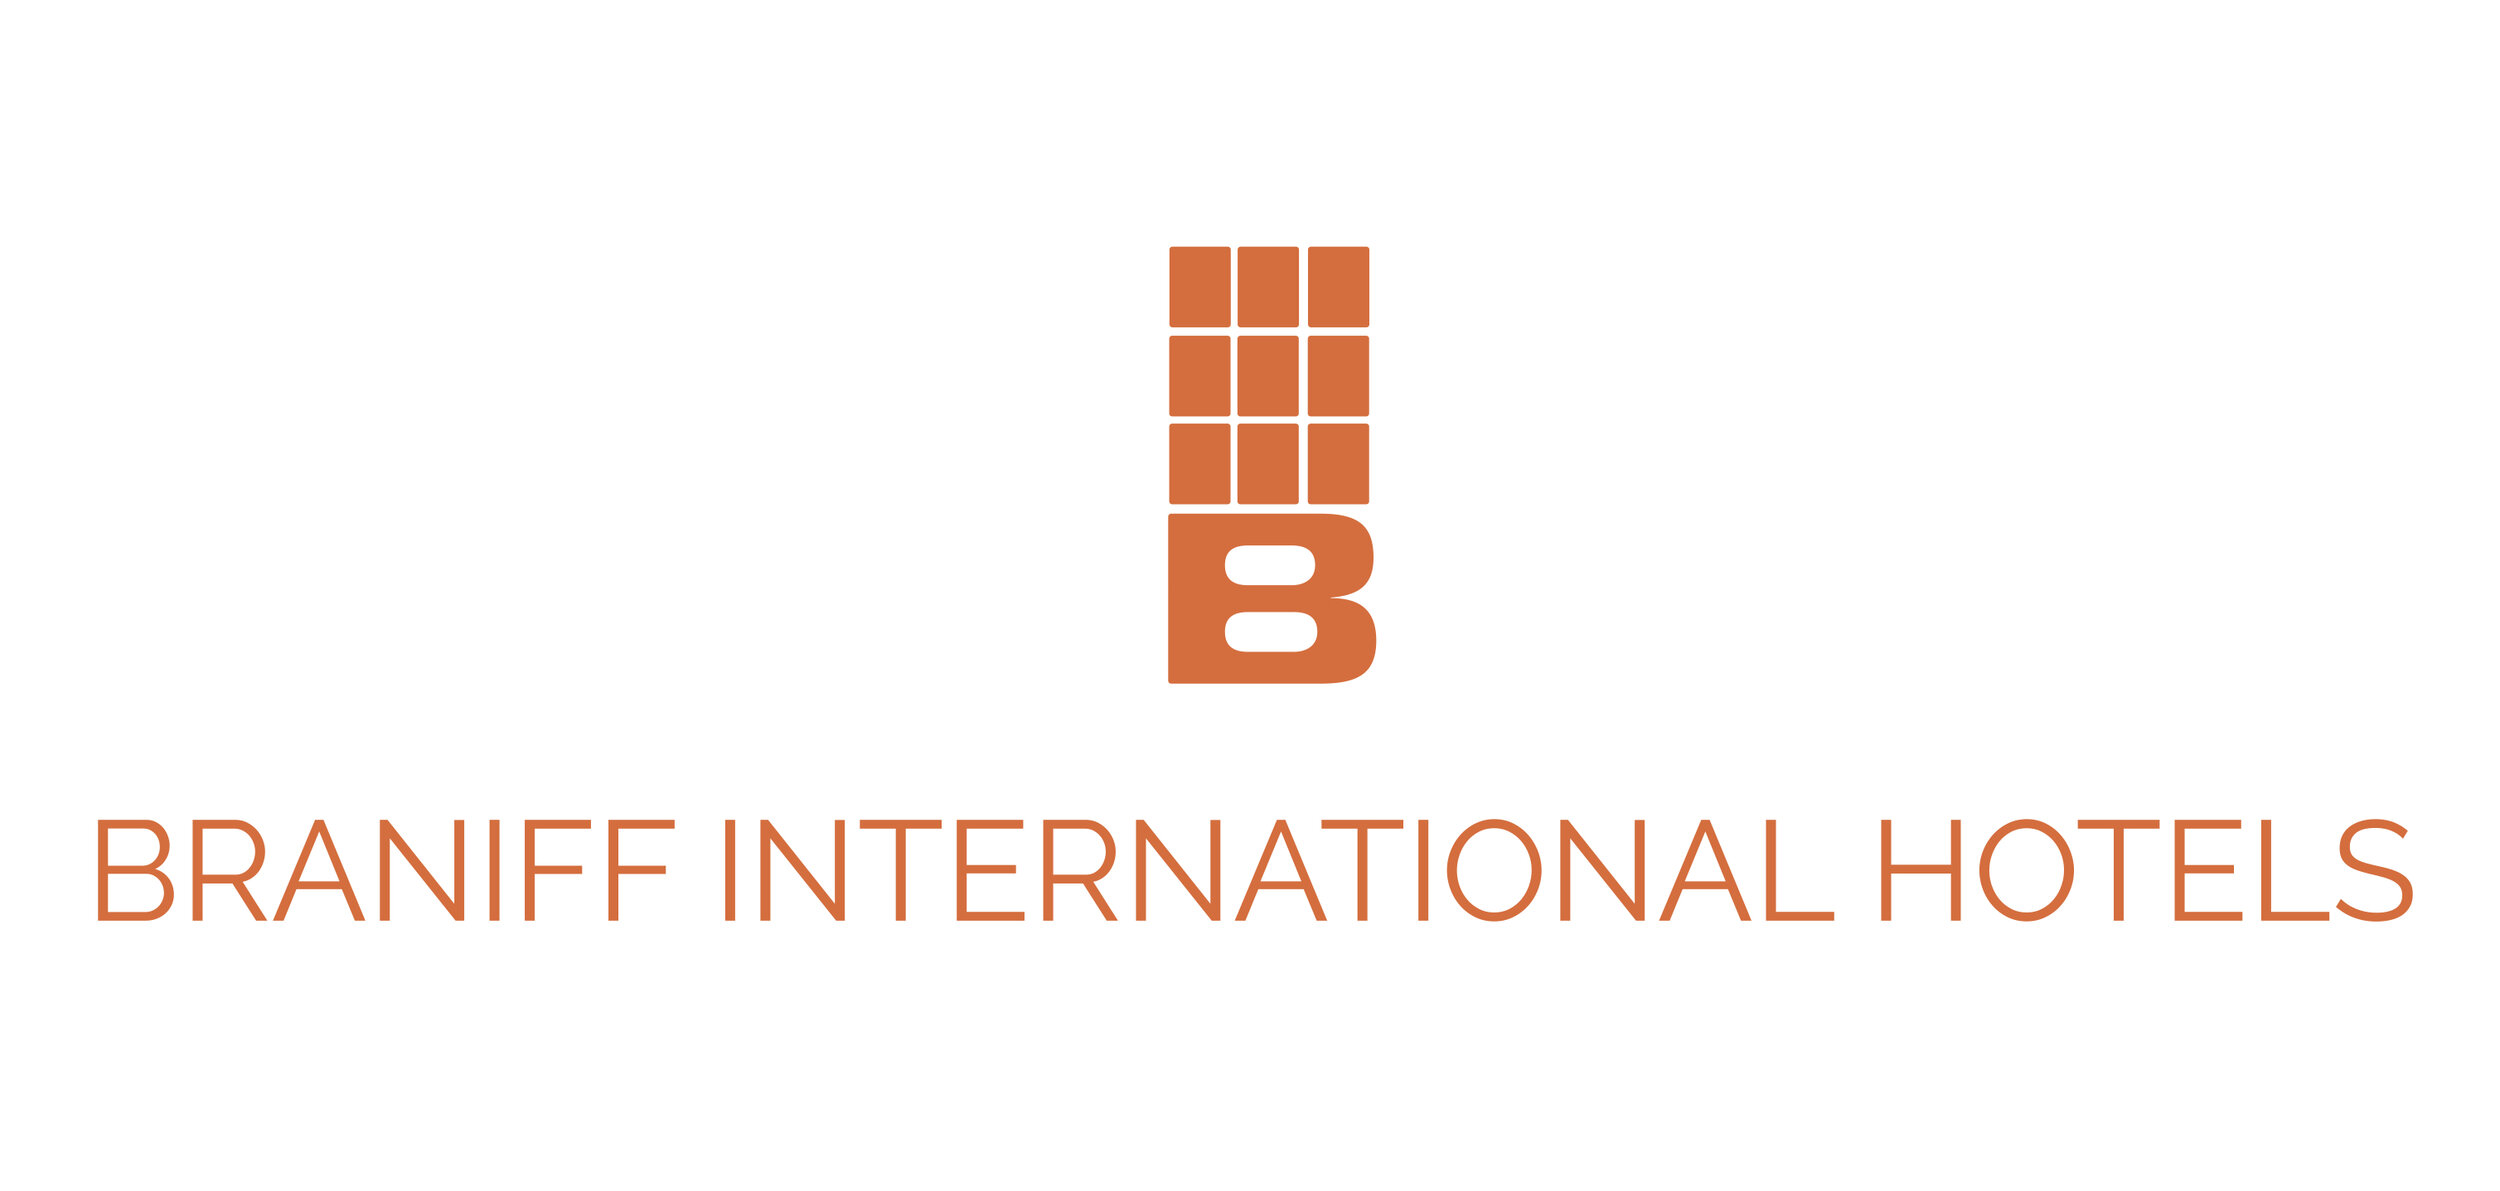 BI_Braniff_Place_logo.jpg